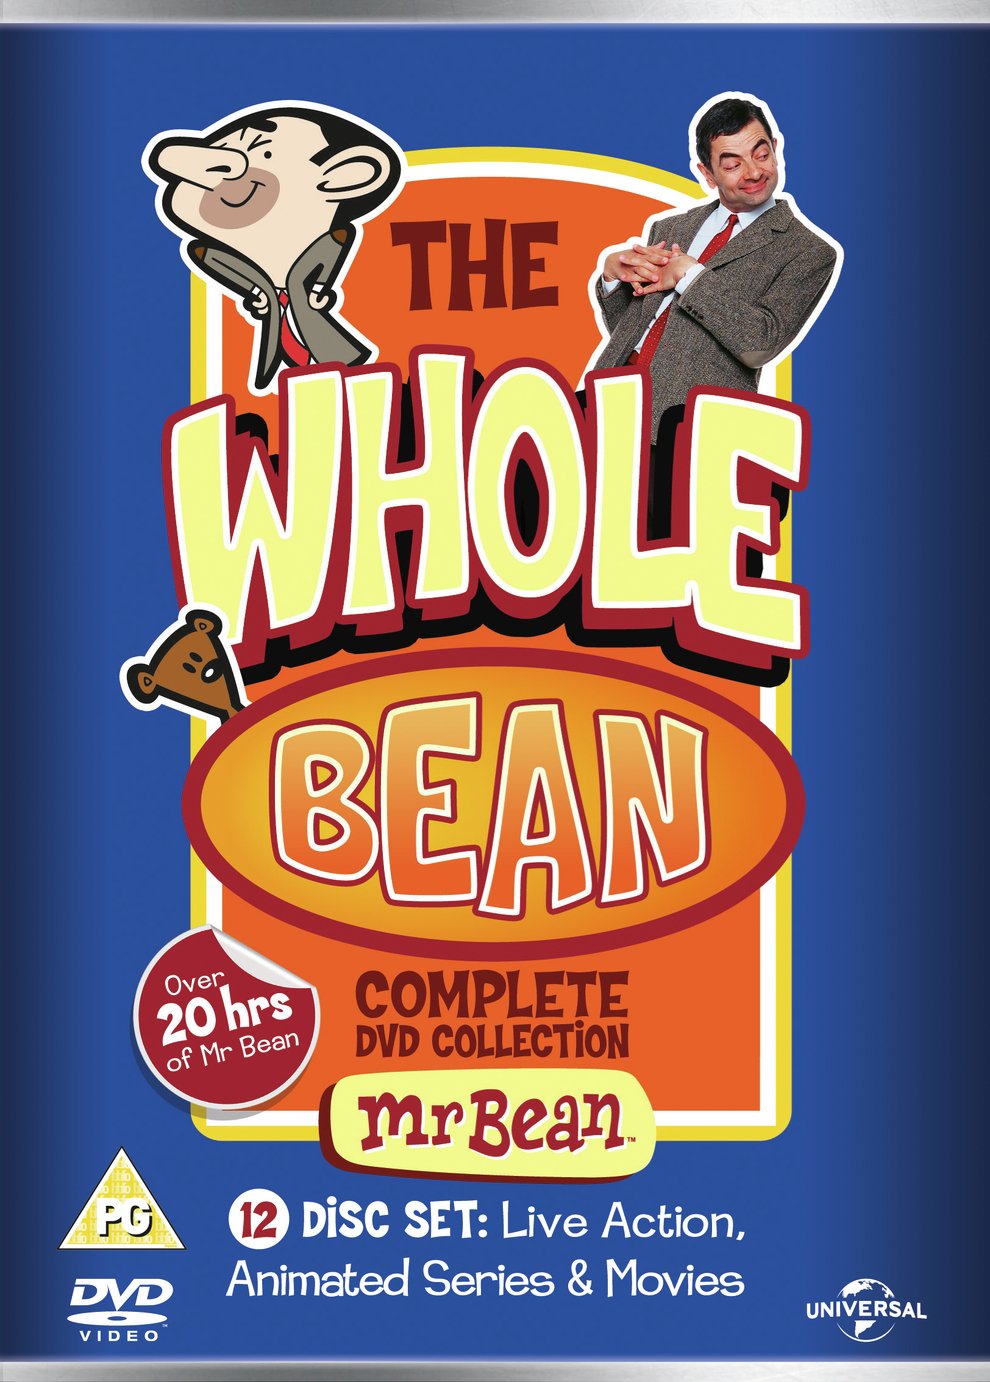 Mr Bean: The Whole Bean DVD Box Set Review